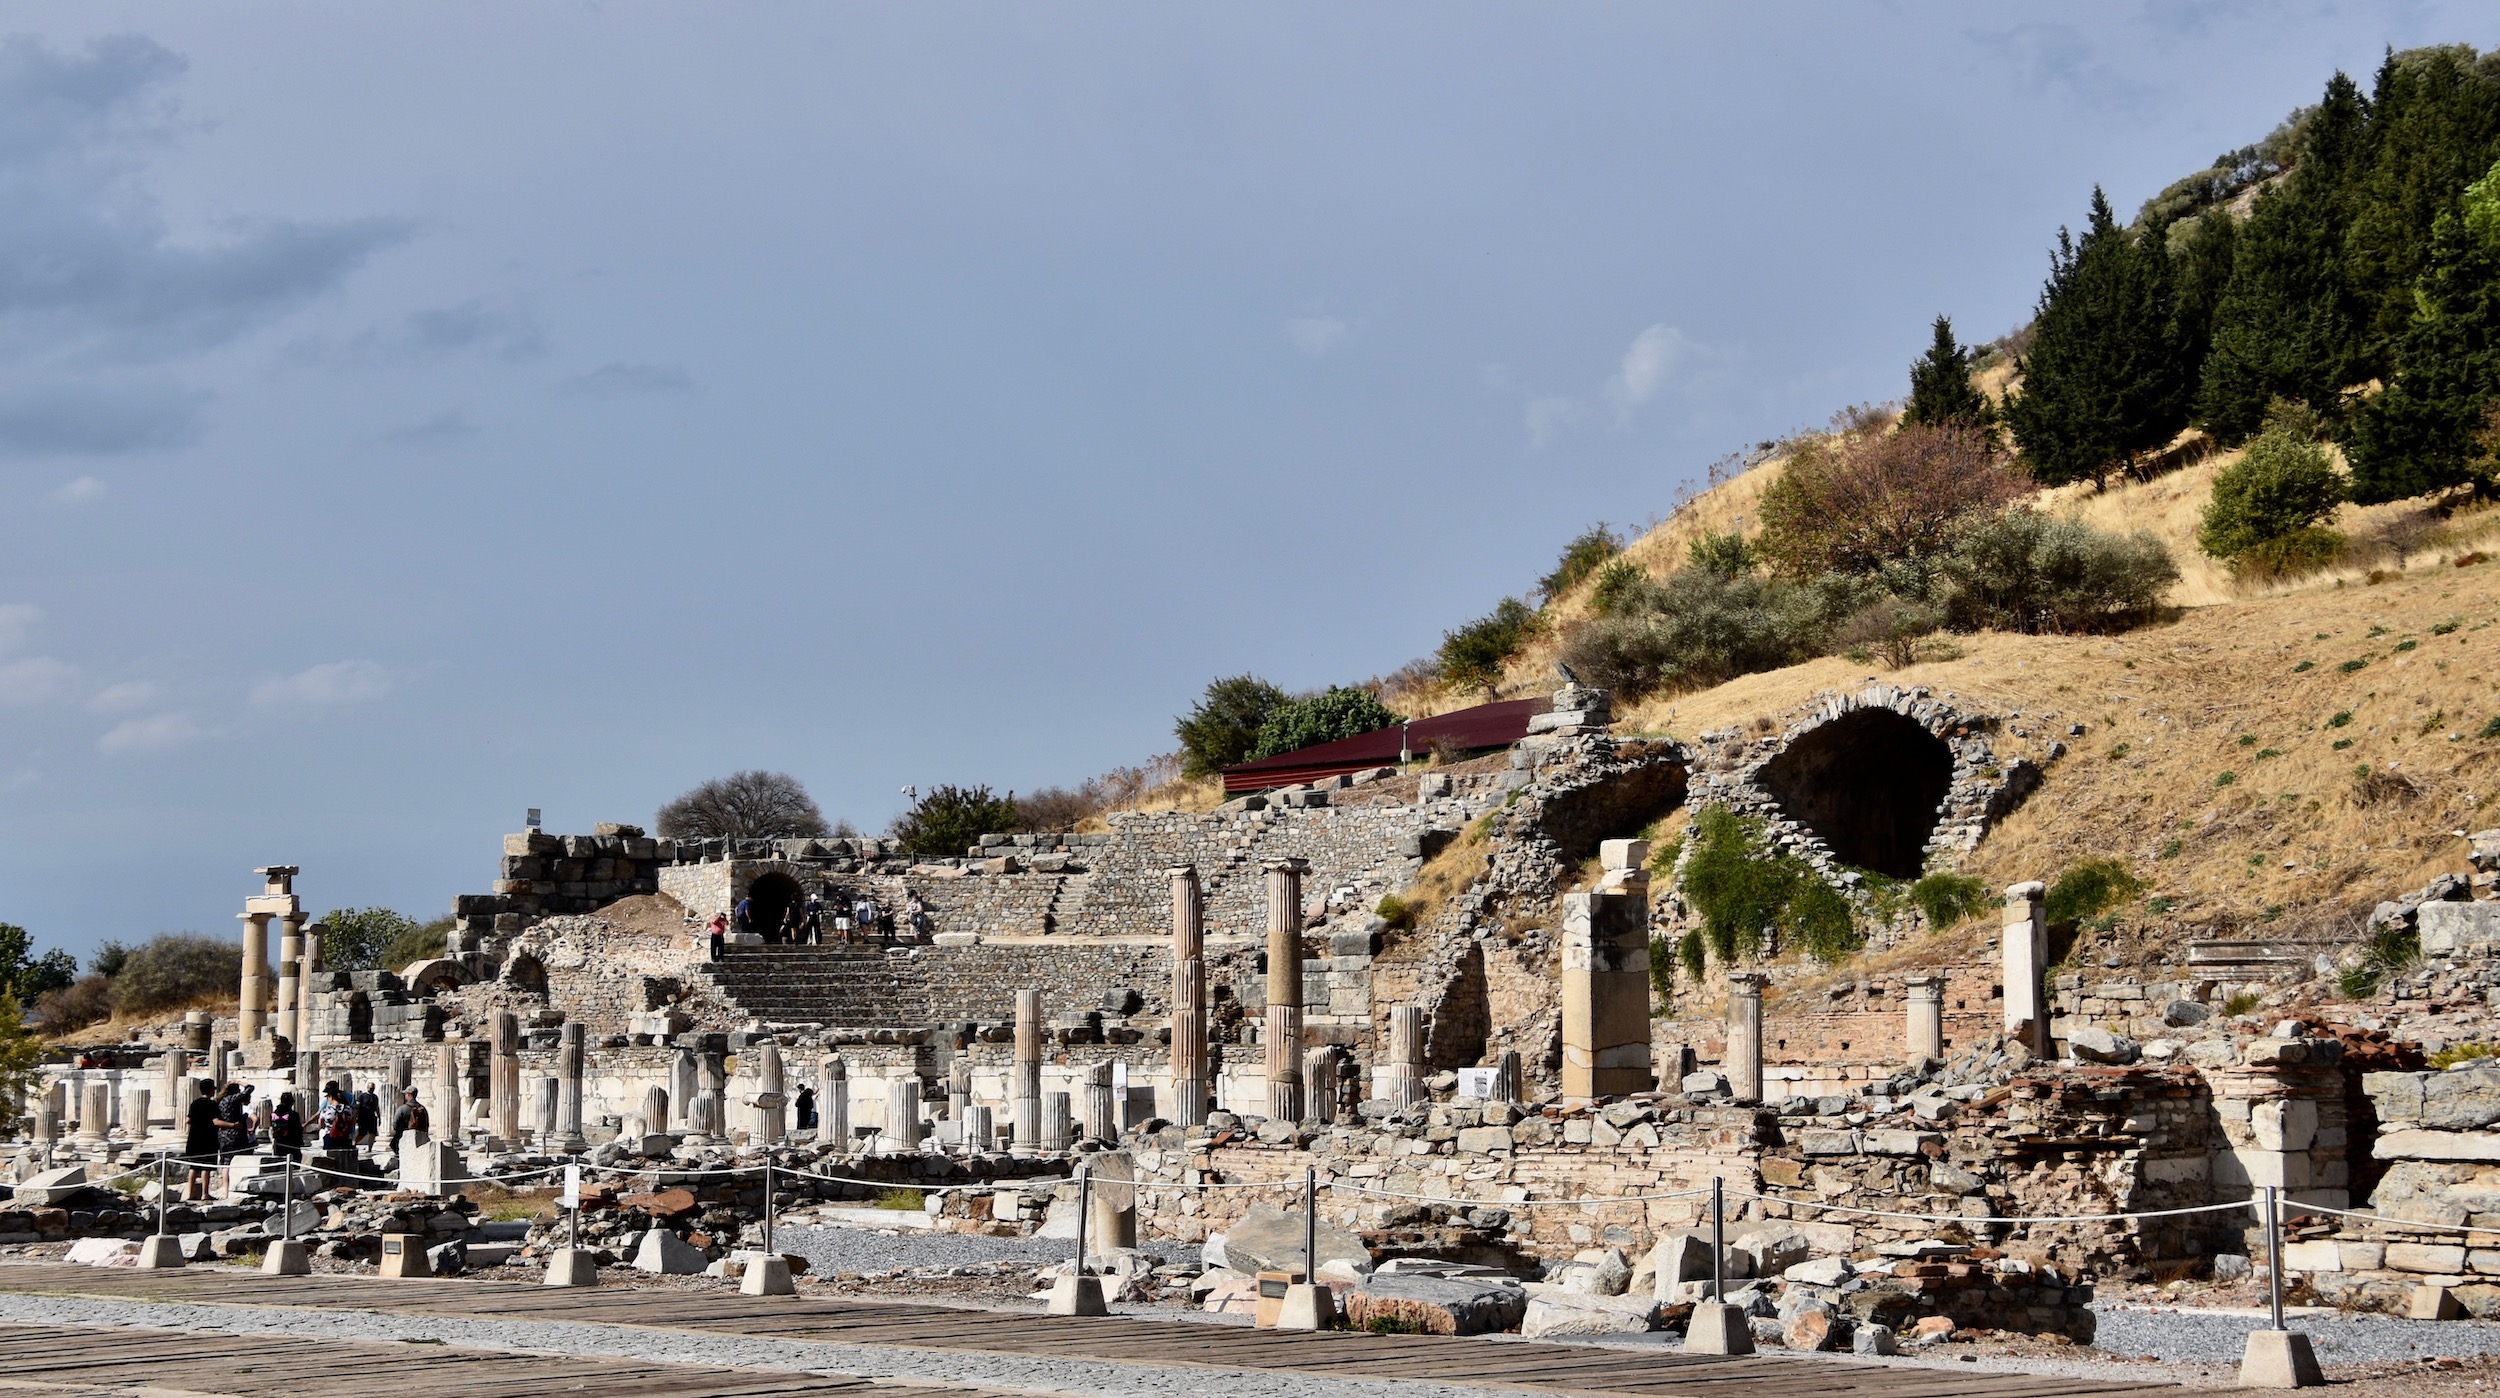 First Look at Ephesus